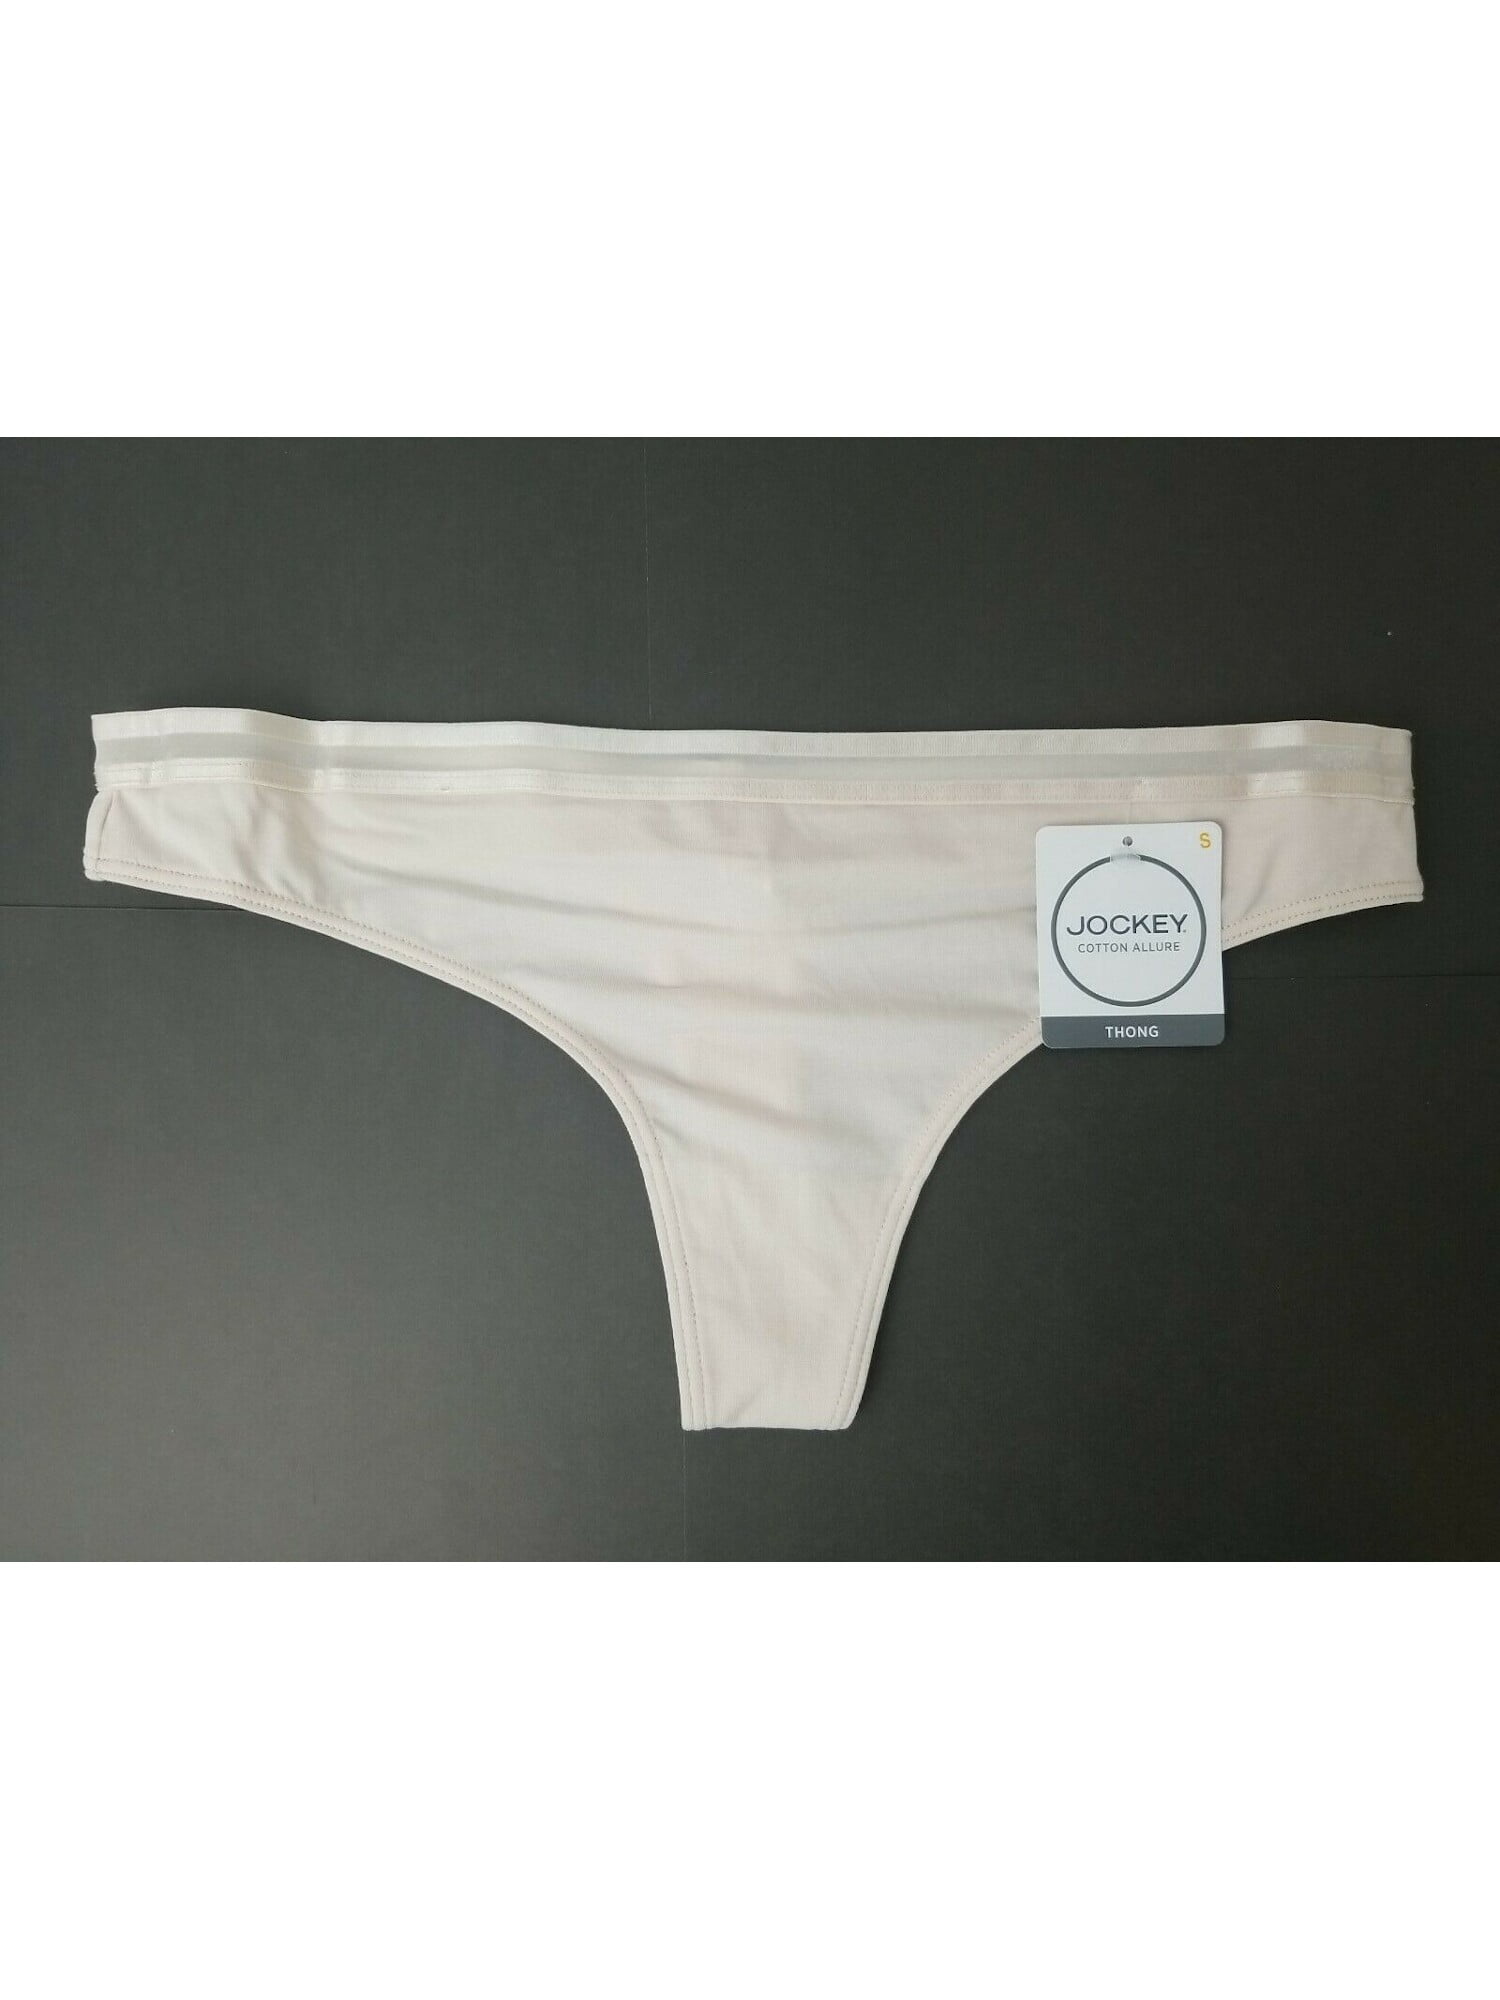 JOCKEY Intimates Beige Solid Everyday Thong Size: XL - Walmart.com